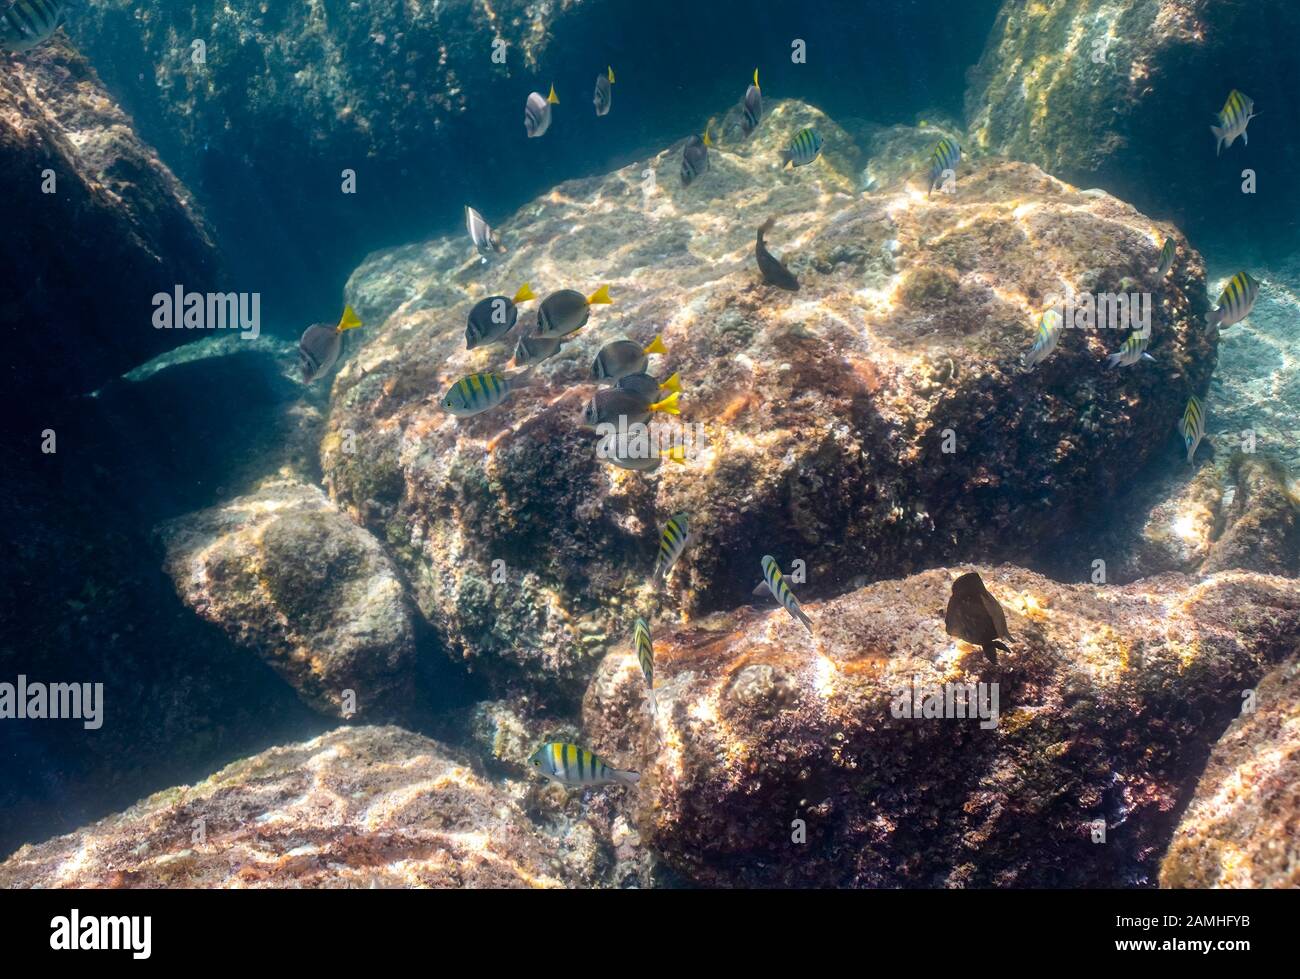 A school of reef fish including Panamic Sergeant Major (Abudefduf troschelii) and Yellowtail Surgeonfish (Prionurus punctatu) in the Sea of Cortez (Gu Stock Photo